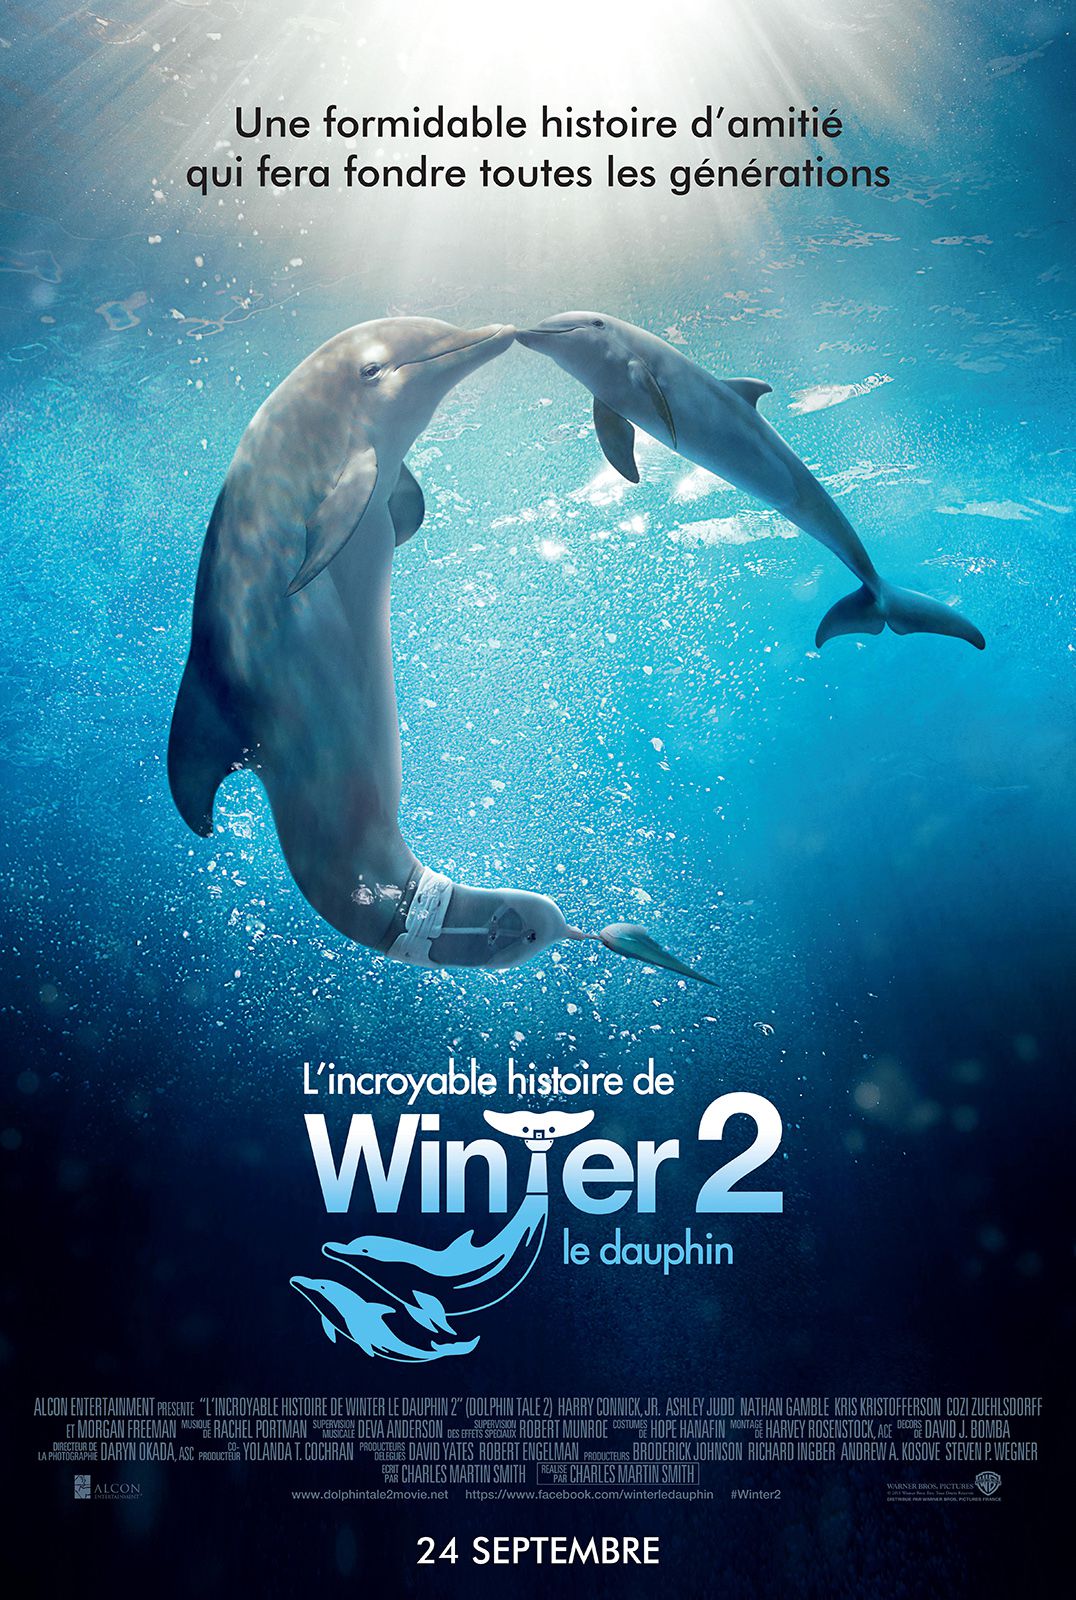 L'Incroyable Histoire de Winter le dauphin 2 - Film (2014) streaming VF gratuit complet